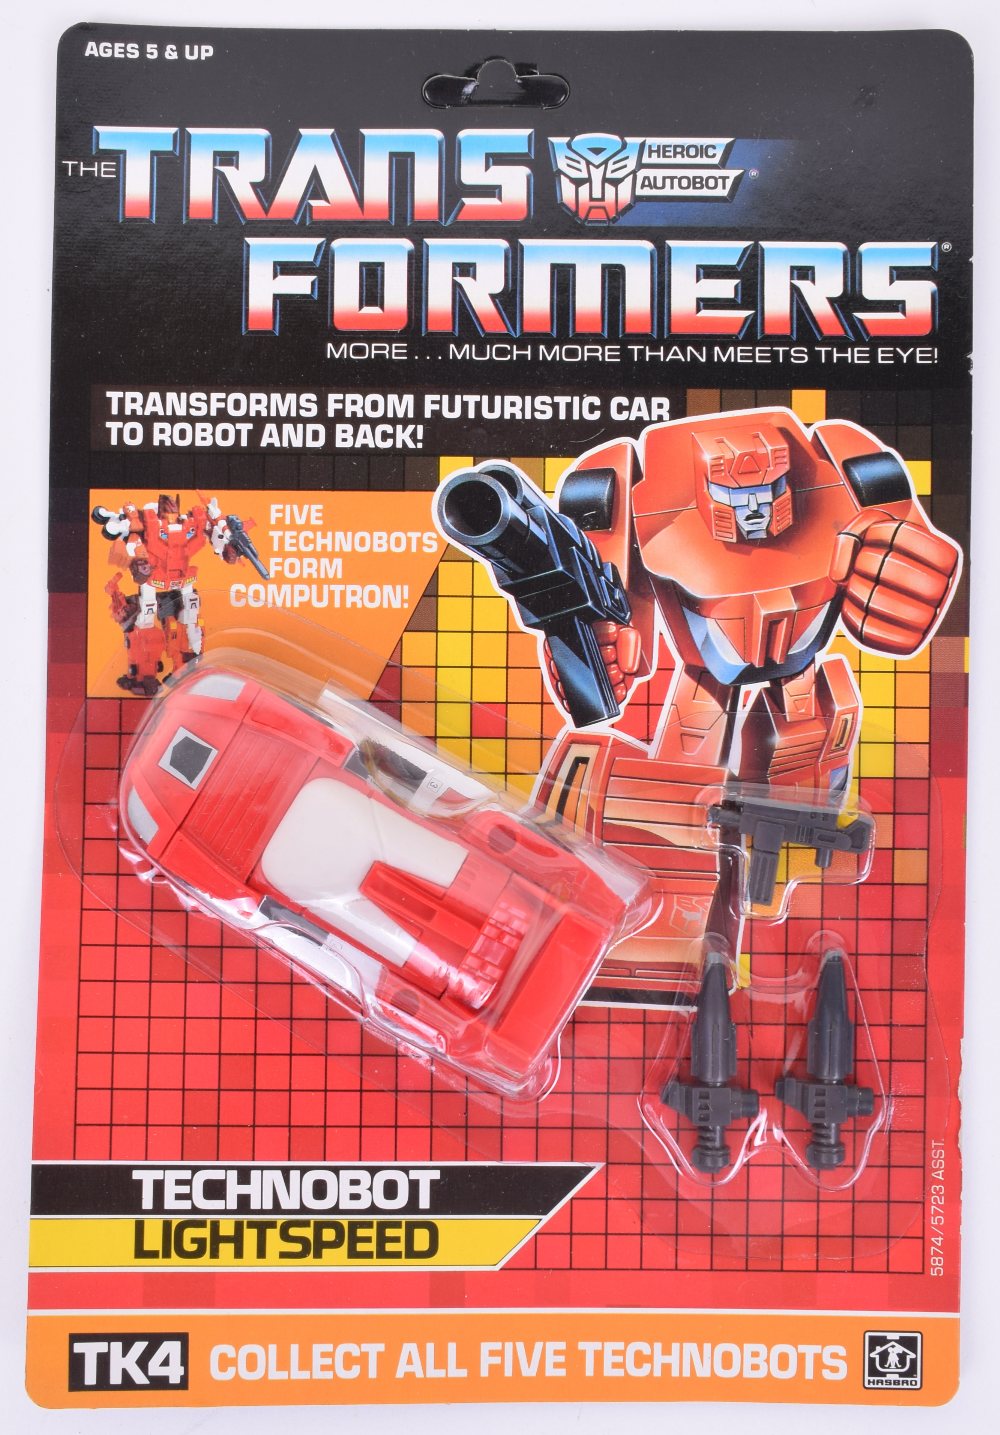 Original Carded Hasbro G1 Transformers, TK4 Technobot ‘Lightspeed’